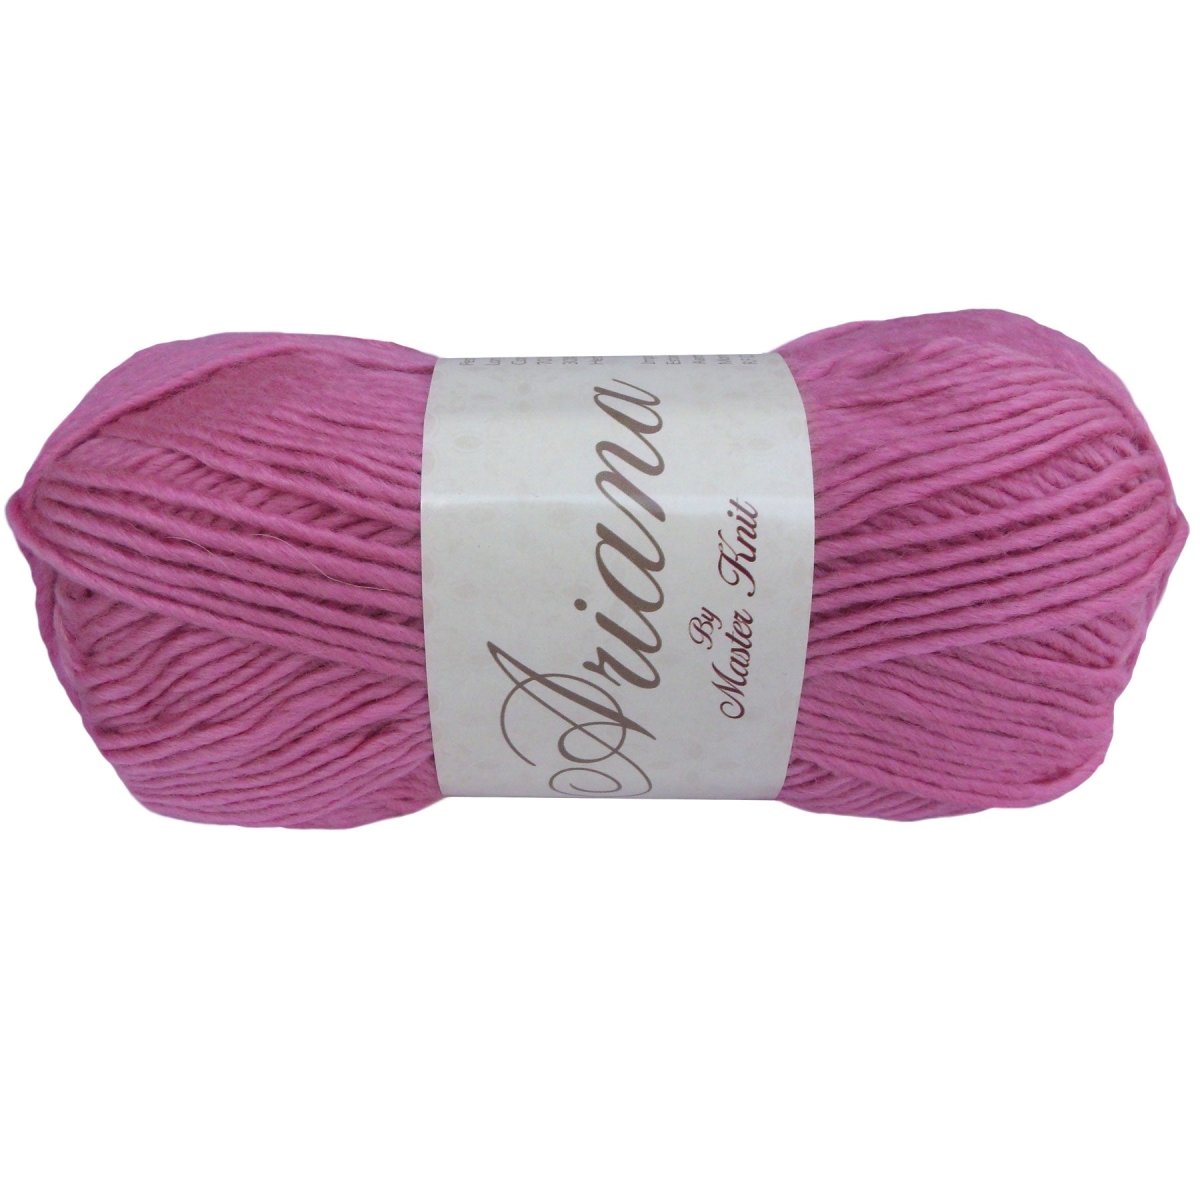 ARIANA - Aran - Crochetstores9510-229